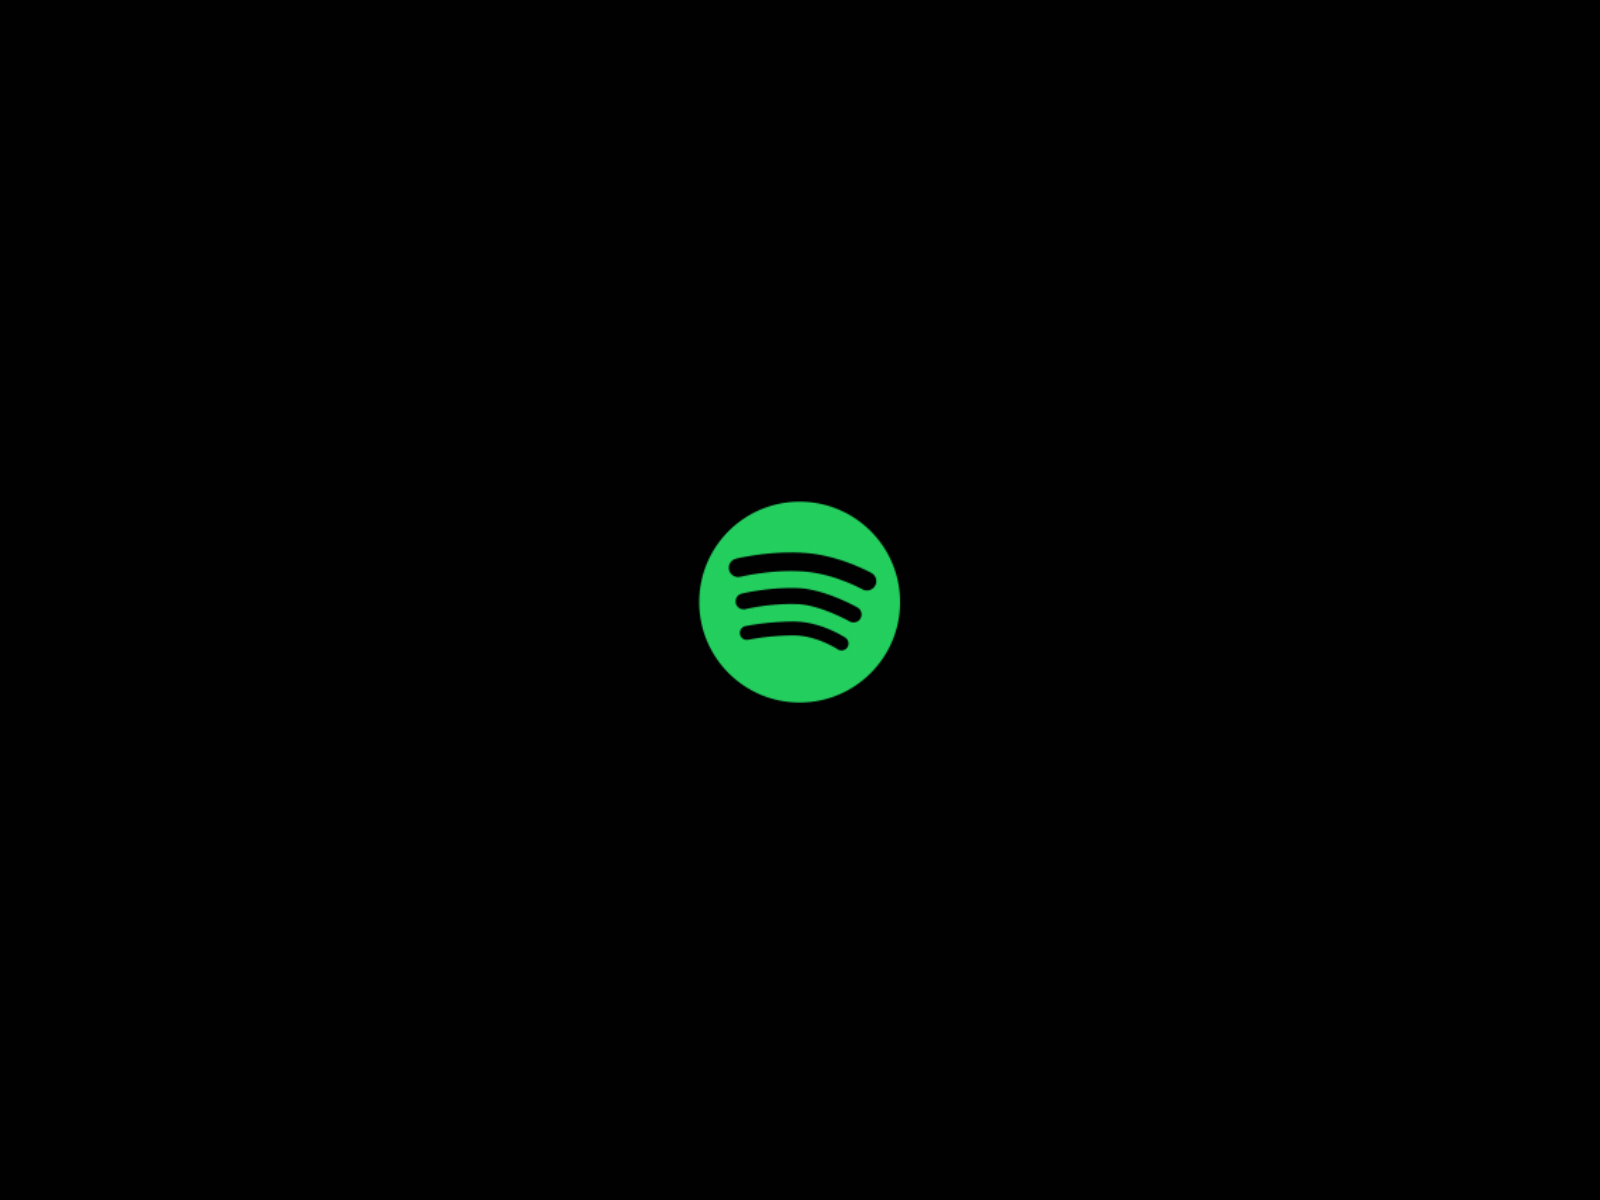 Spotify animated logo